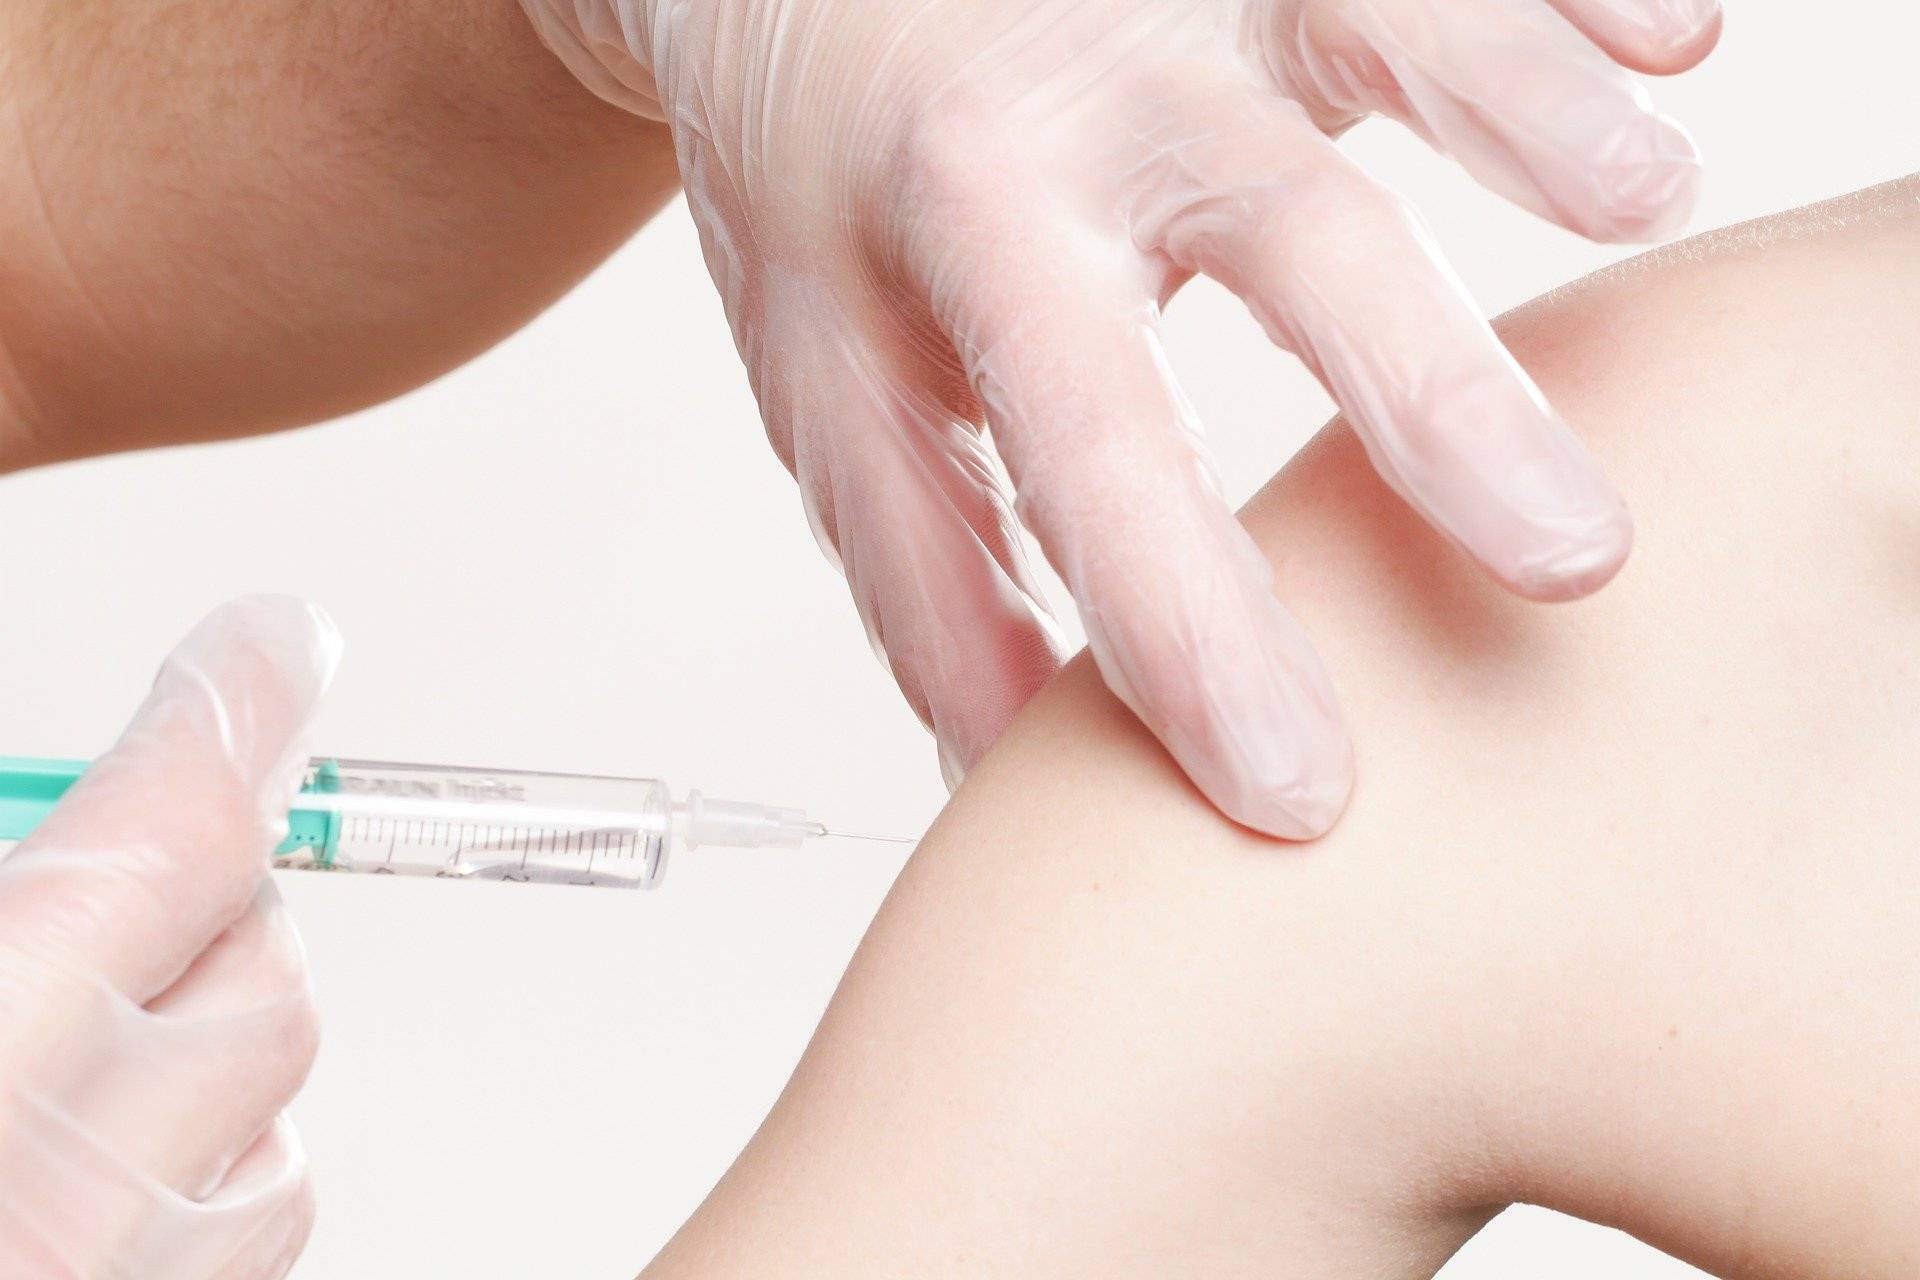 Linke: ÖPNV zum Impfzentrum erhöhen